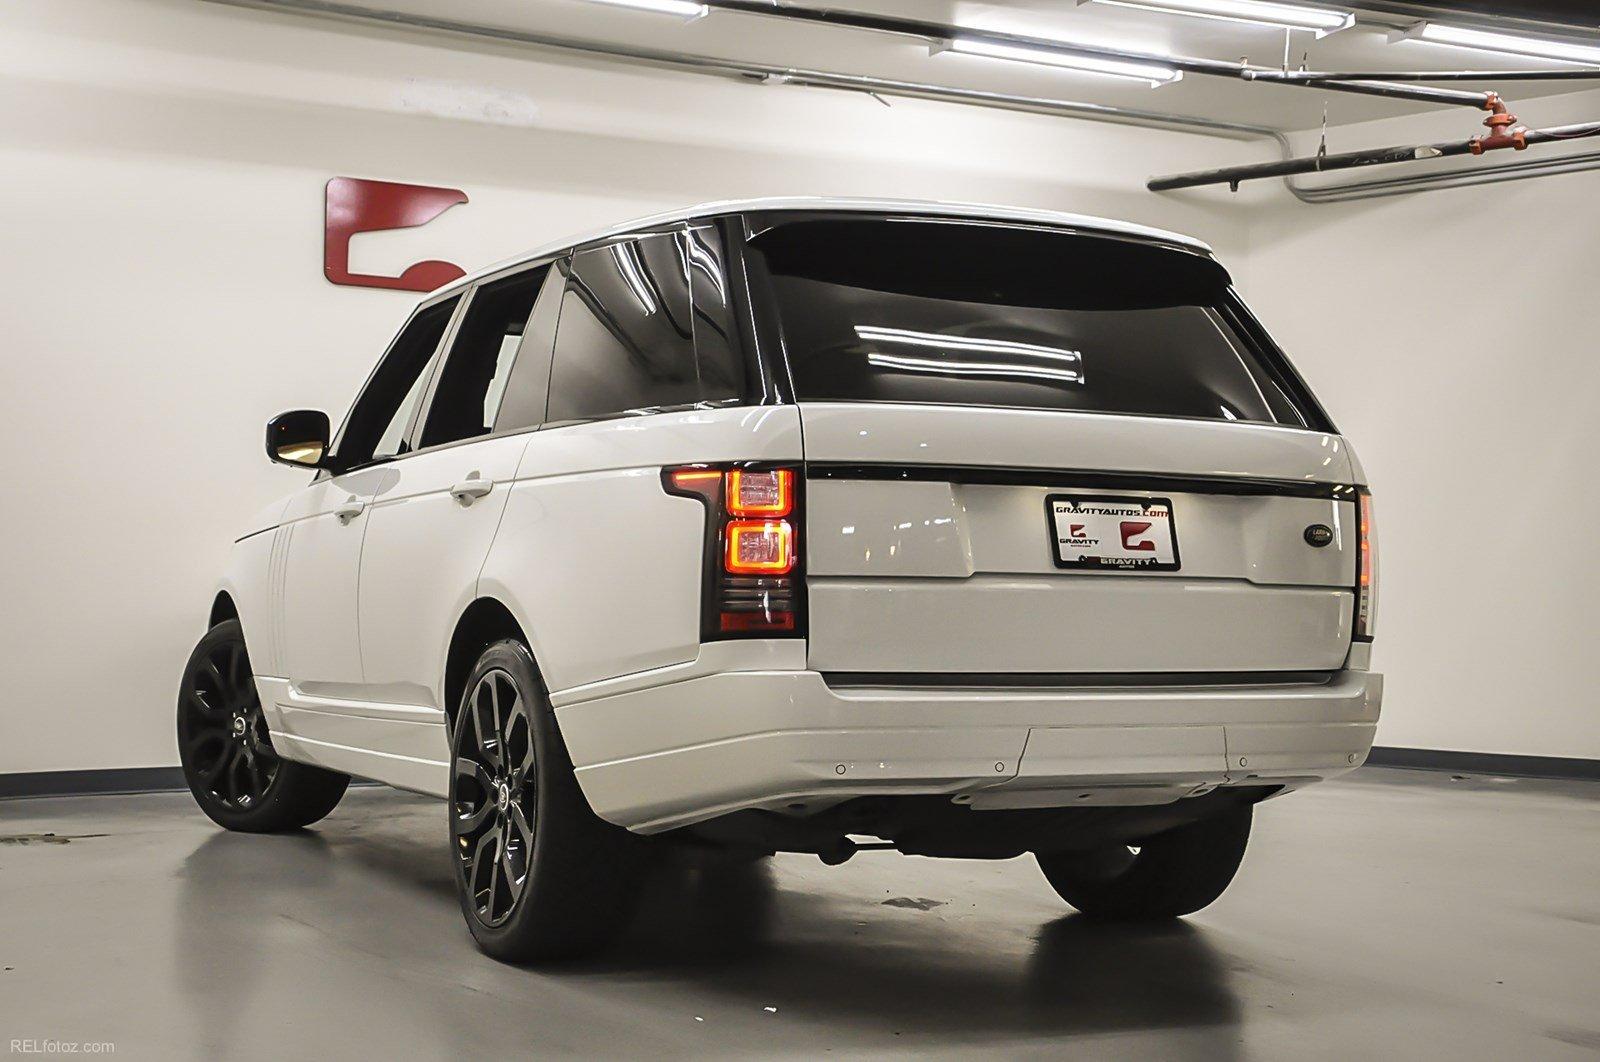 Used 2014 Land Rover Range Rover HSE for sale Sold at Gravity Autos Marietta in Marietta GA 30060 3